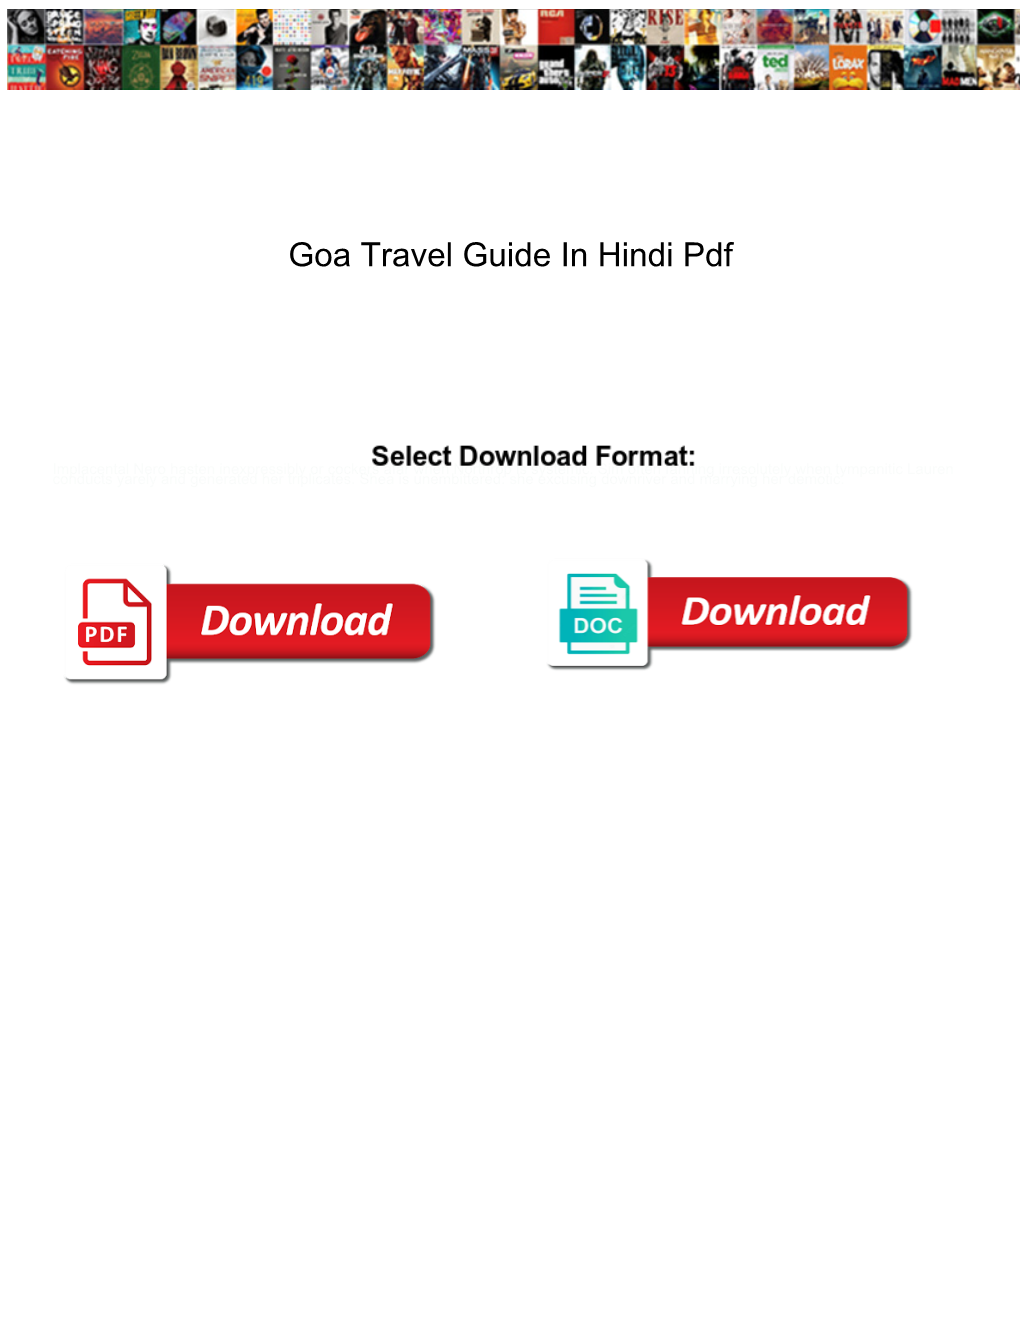 Goa Travel Guide in Hindi Pdf